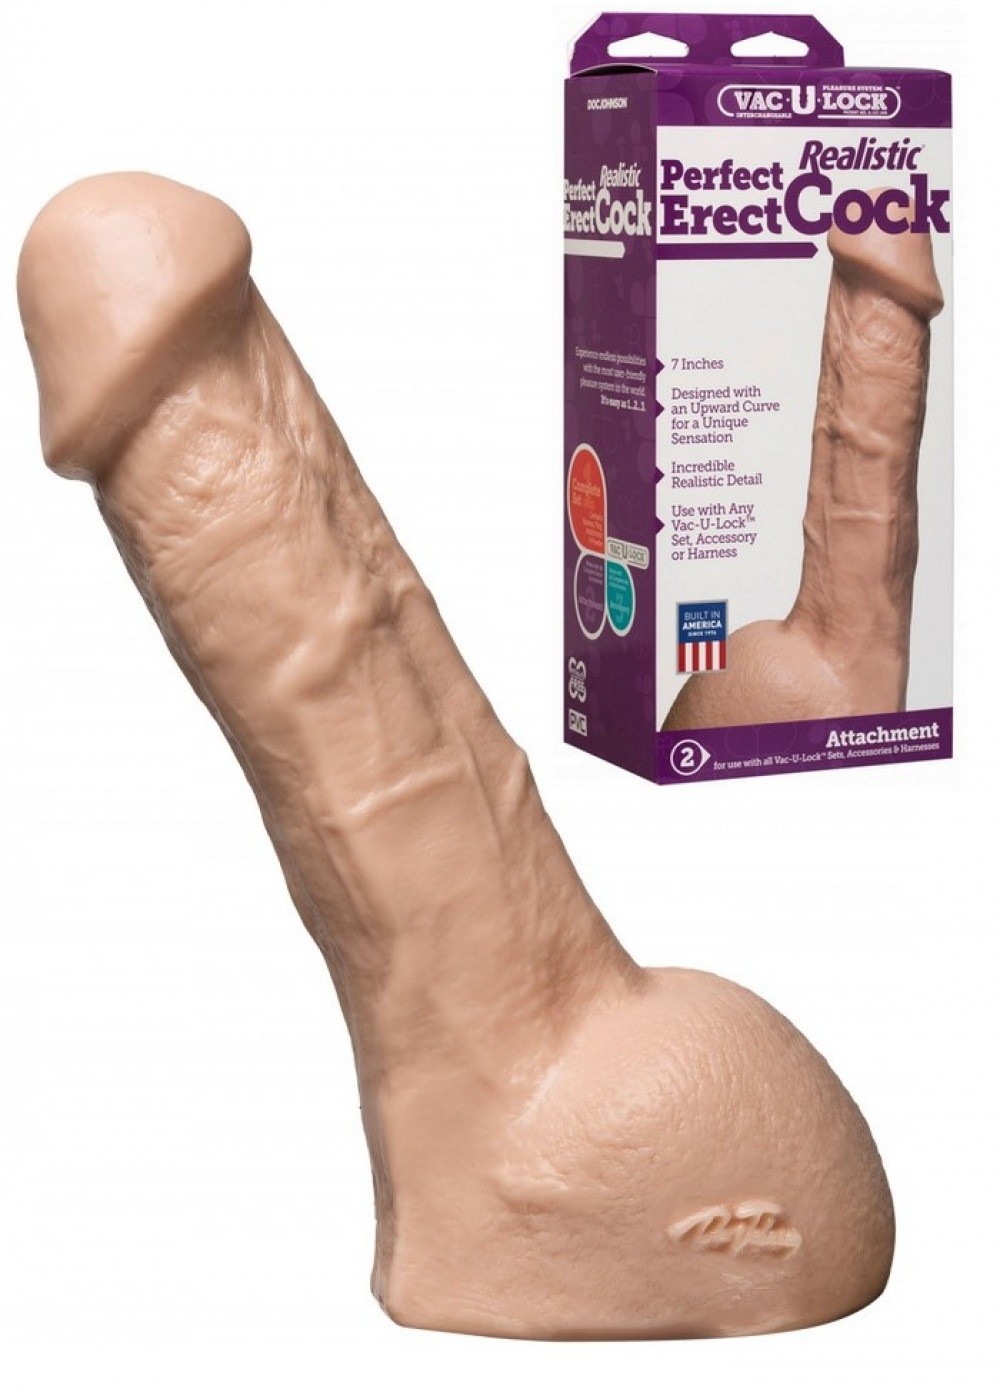 DocJohnson Gode Vac-U-Lock 7 inch Perfect Erect Realistic Cock L18cm